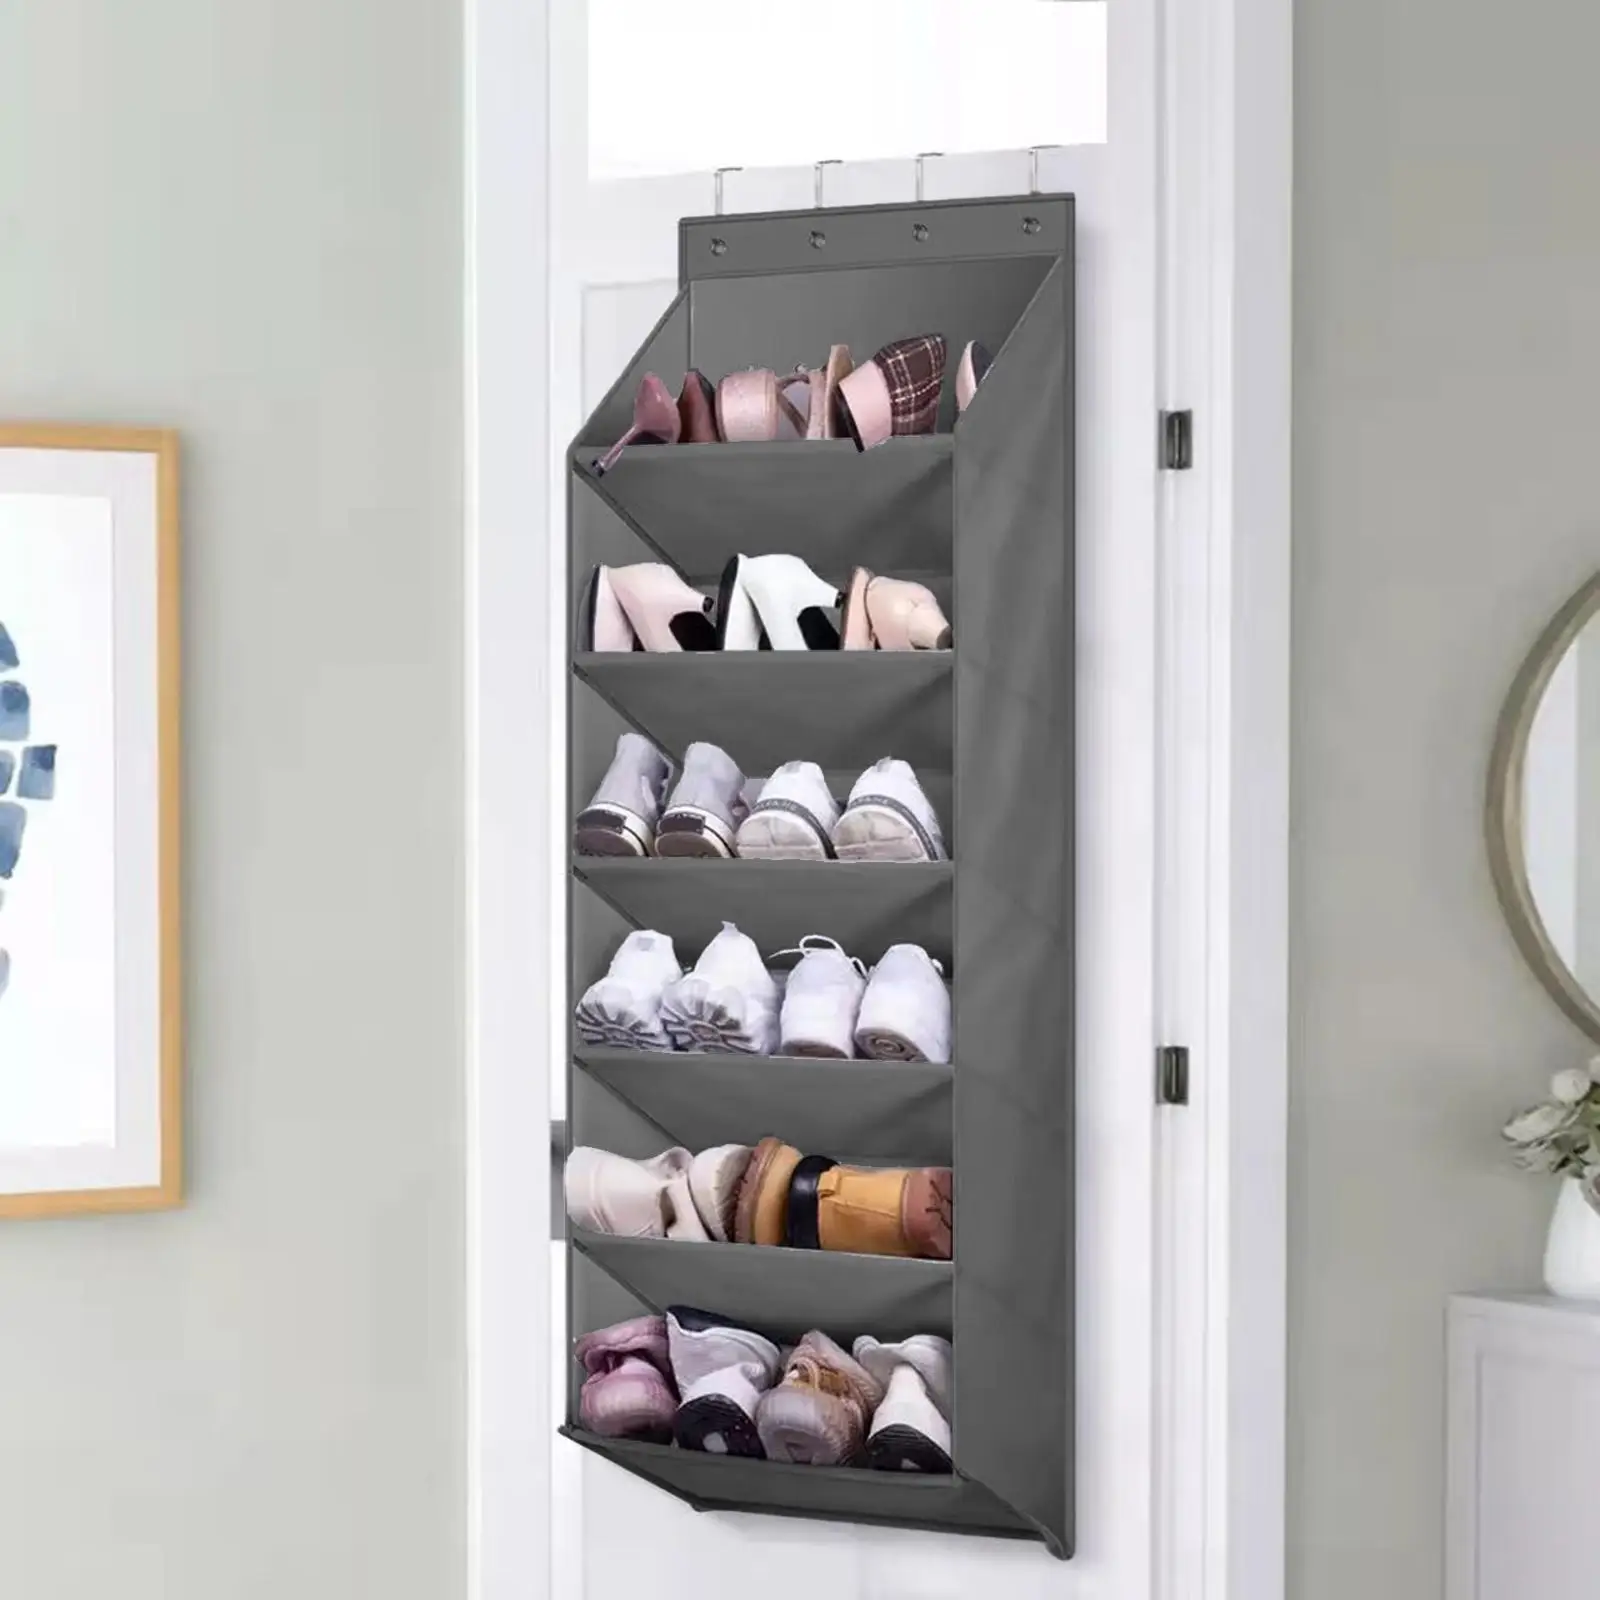 6 Tier Large Deep Pockets Over the Door Shoe Organizer for Narrow Door Towels Baby Items Closet Hanger 16 Pair Shoes Toys